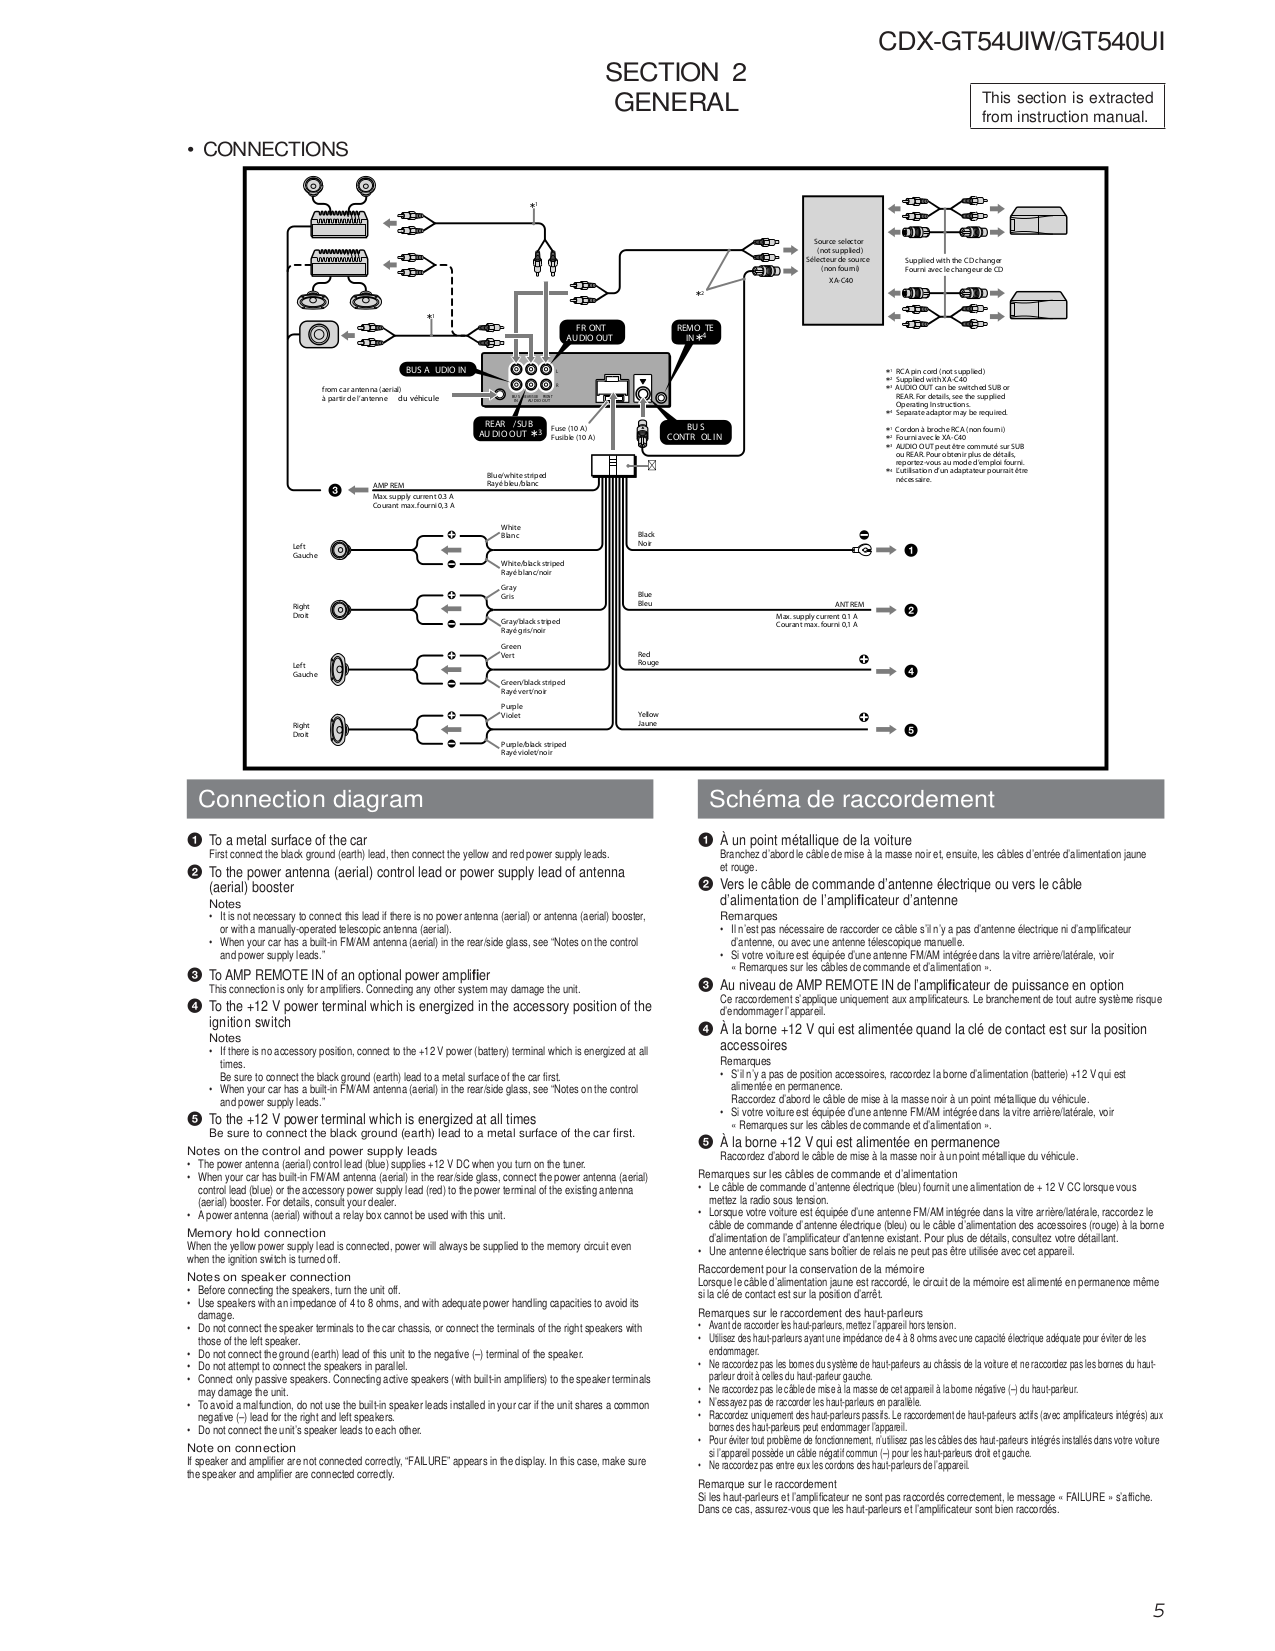 Diagram Wiring Diagram Sony Xplod 52wx4 Full Version Hd Quality Xplod 52wx4 Fenndiagram E Conquete Fr